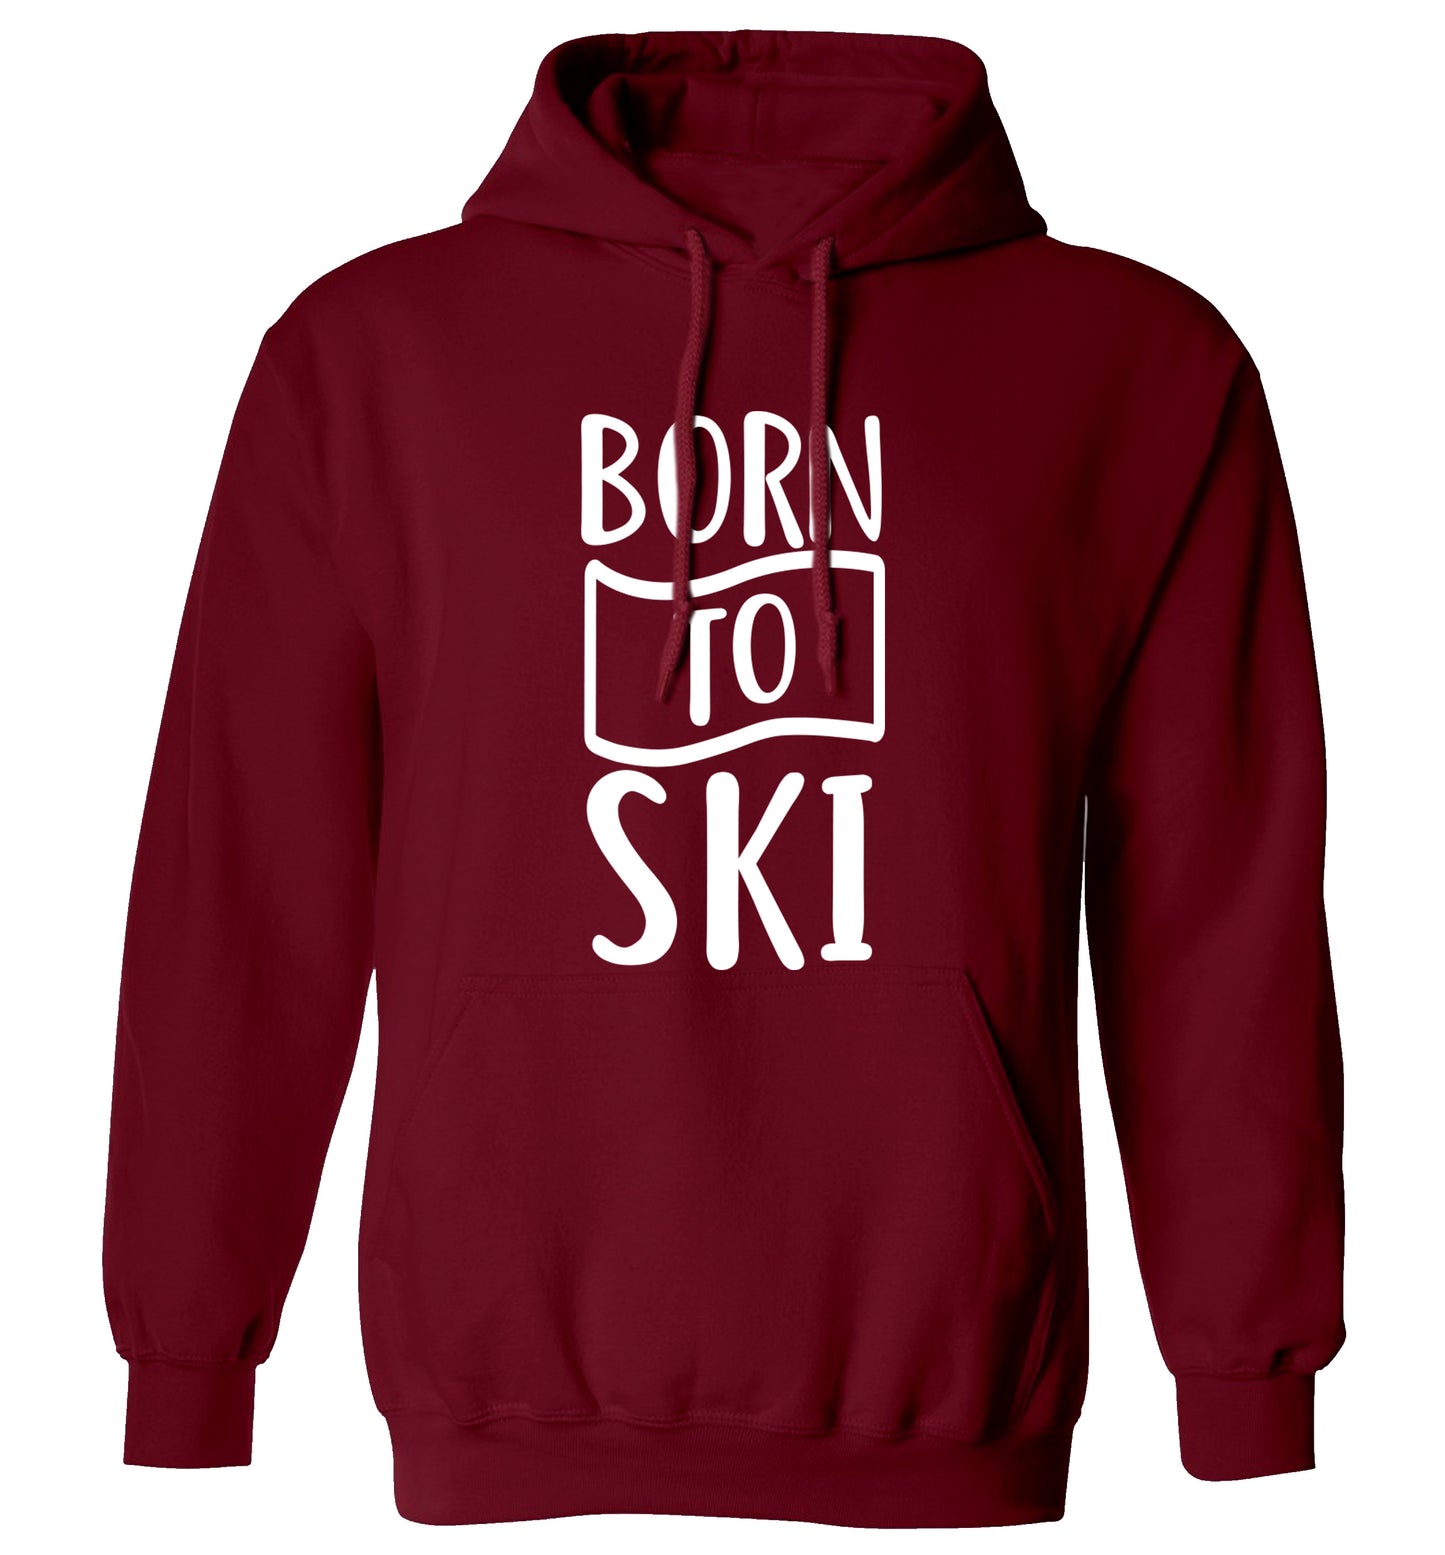 Born to ski adults unisexmaroon hoodie 2XL